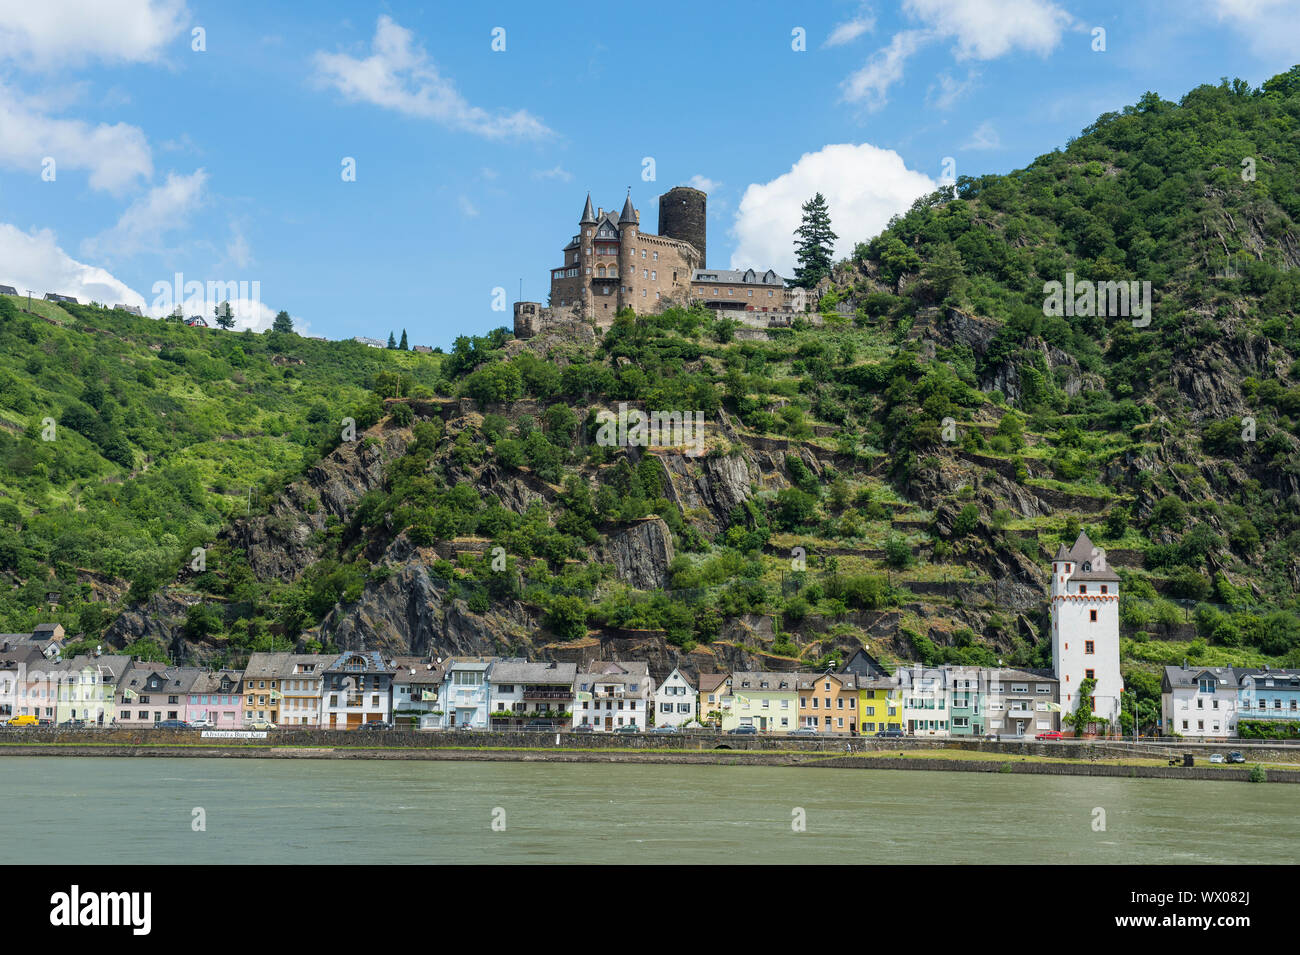 Castle Katz overlooking the Rhine and St. Goar, UNESCO World Heritage Site, Middle Rhine valley, Rhineland-Palatinate, Germany, Europe Stock Photo